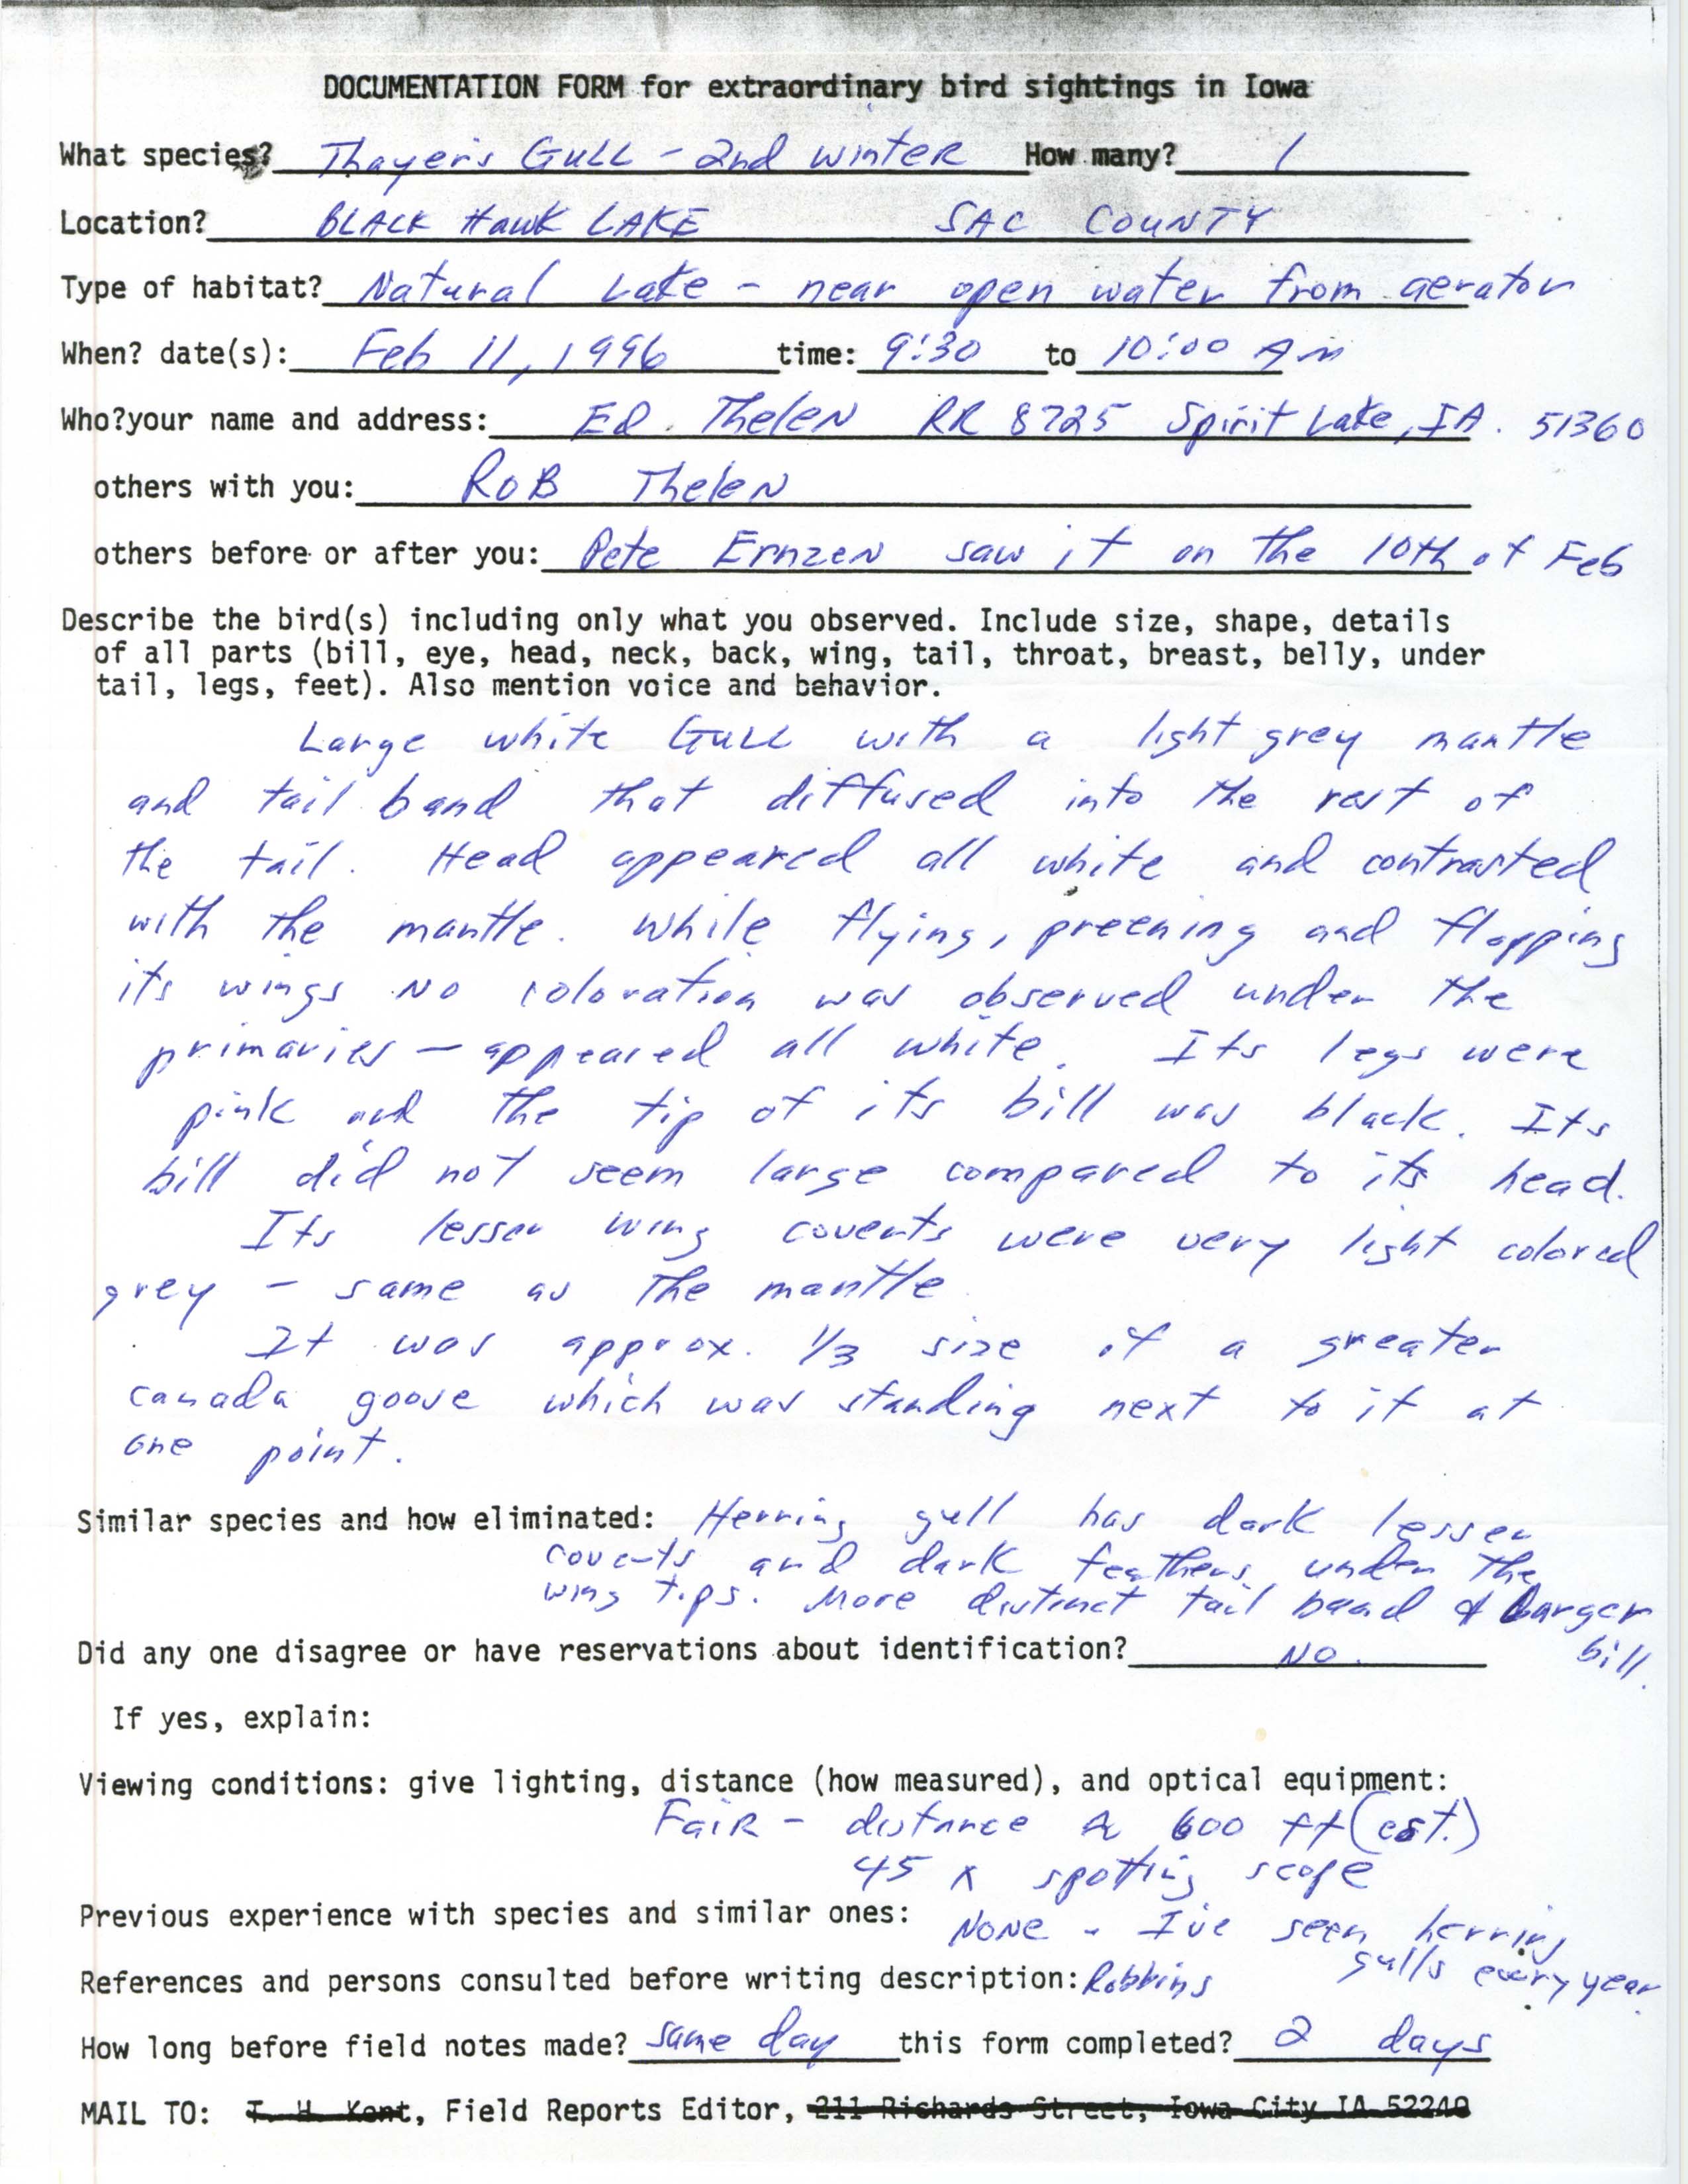 Rare bird documentation form for Thayer's Gull at Black Hawk Lake, 1996